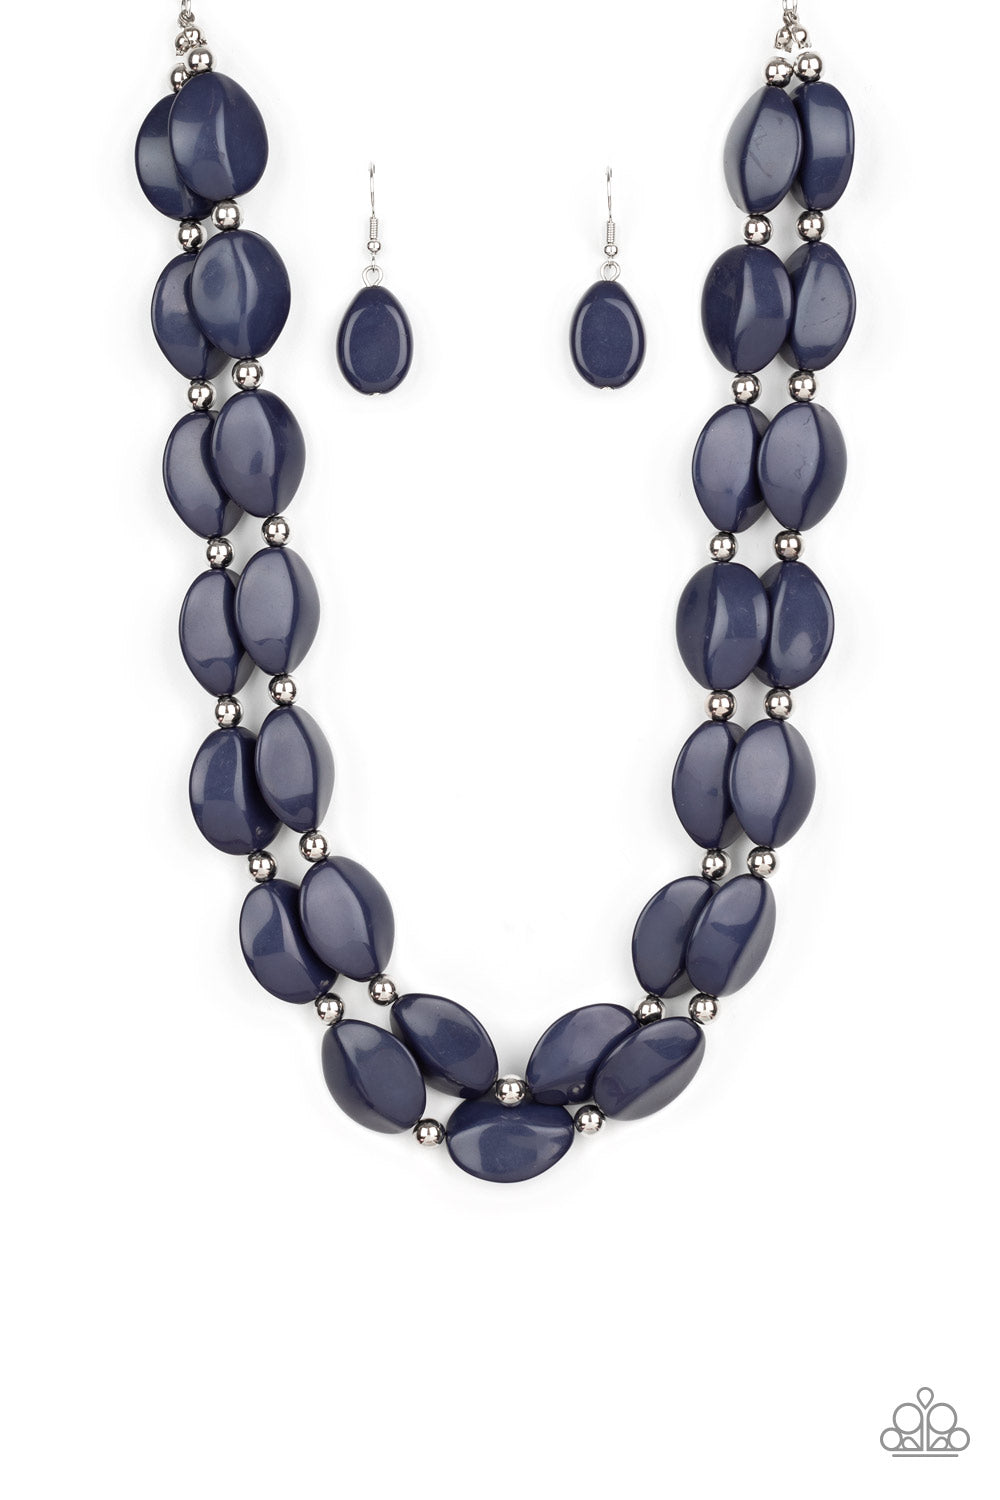 Two-Story Stunner Blue Necklace freeshipping - JewLz4u Gemstone Gallery